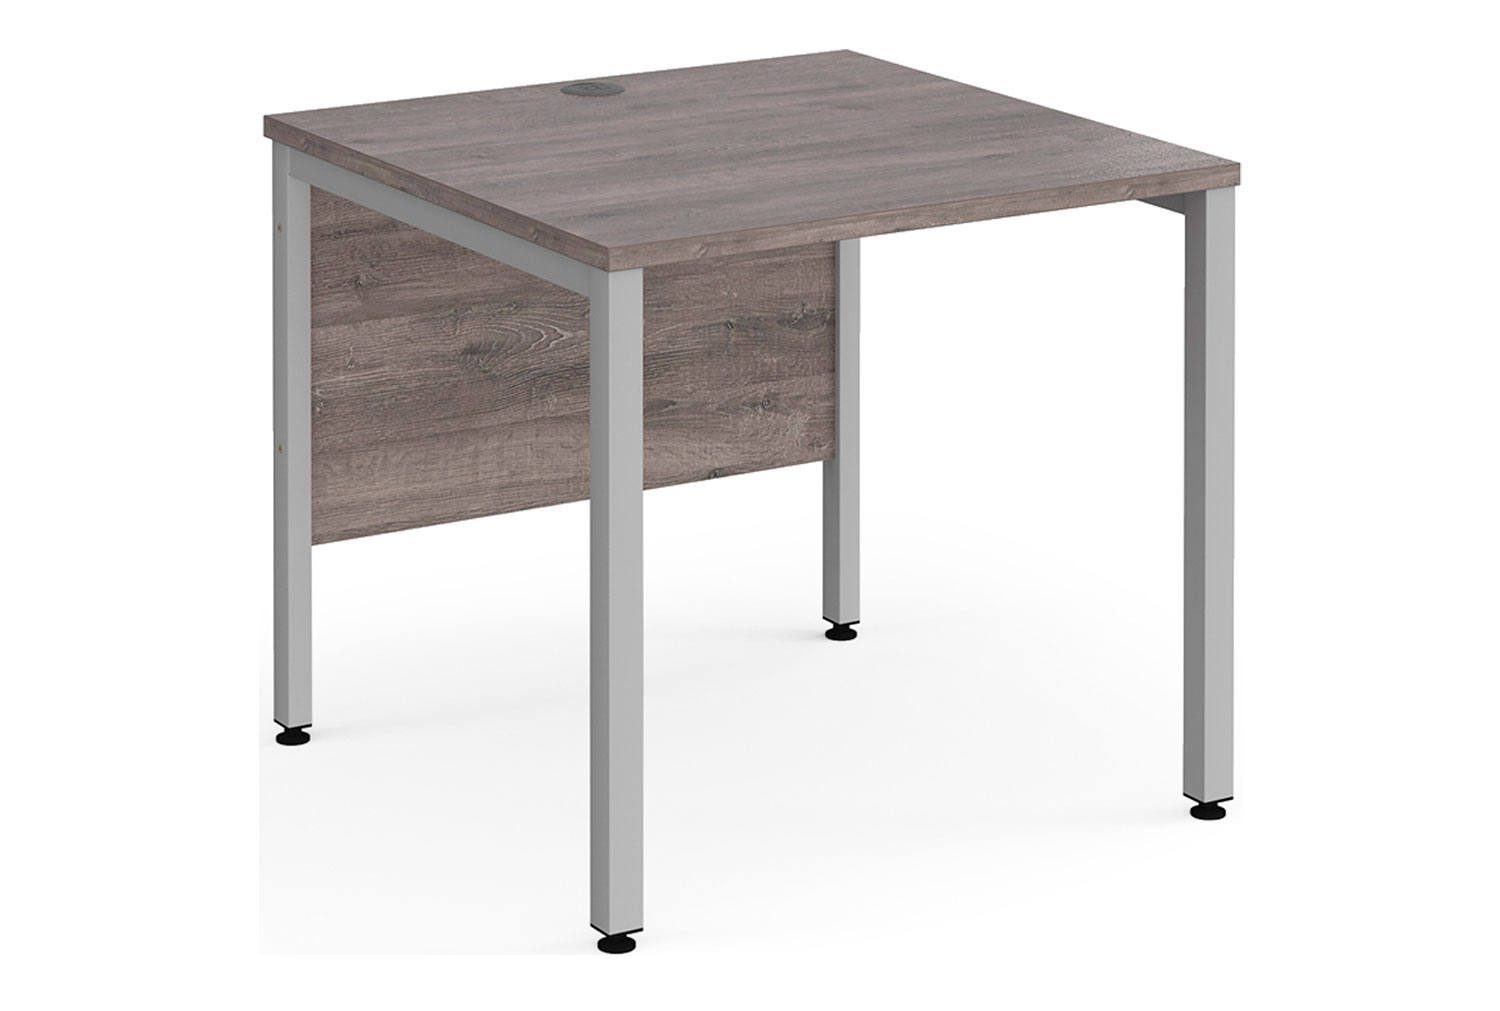 Value Line Deluxe Bench Rectangular Office Desks (Silver Legs), 80wx80dx73h (cm), Grey Oak